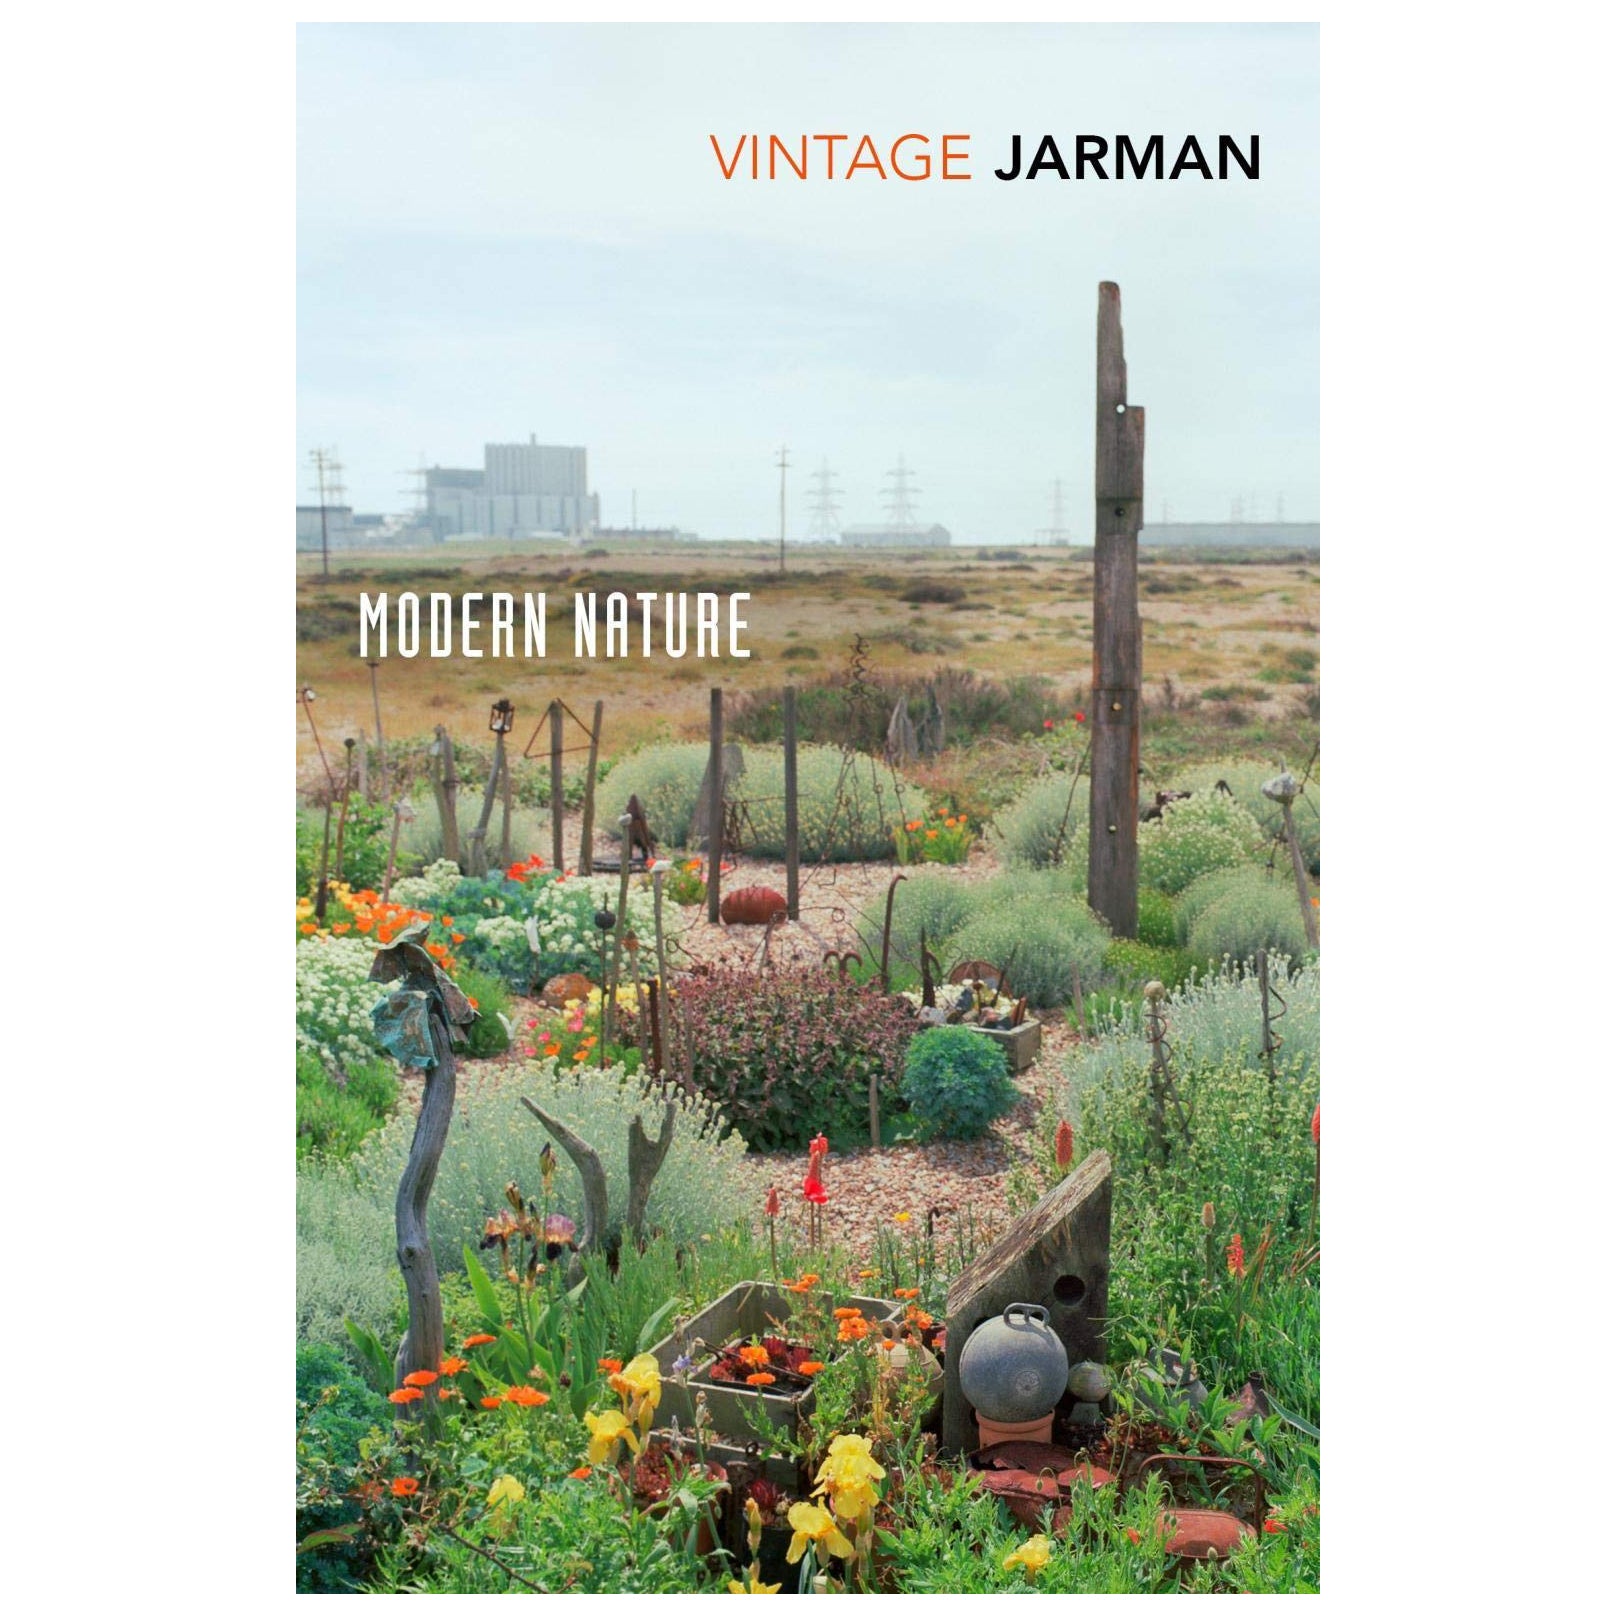 Derek Jarman Modern Nature